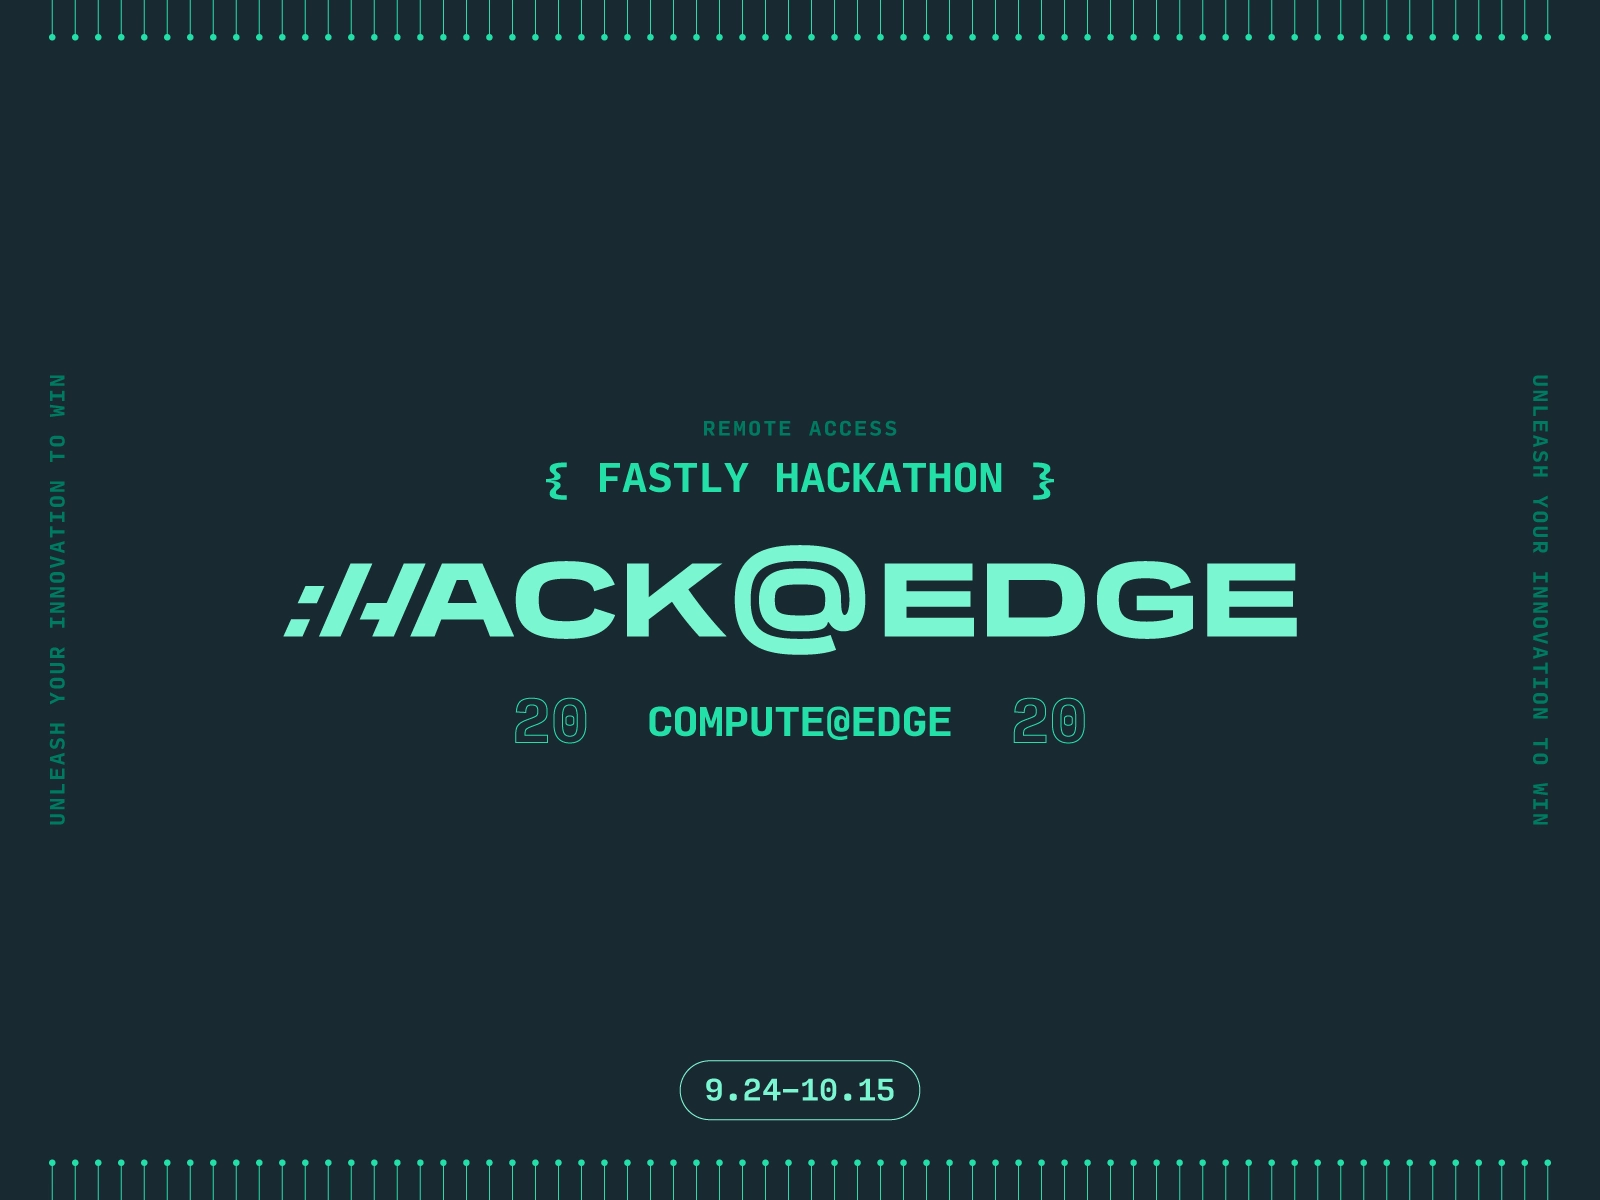 branding for a company hackathon